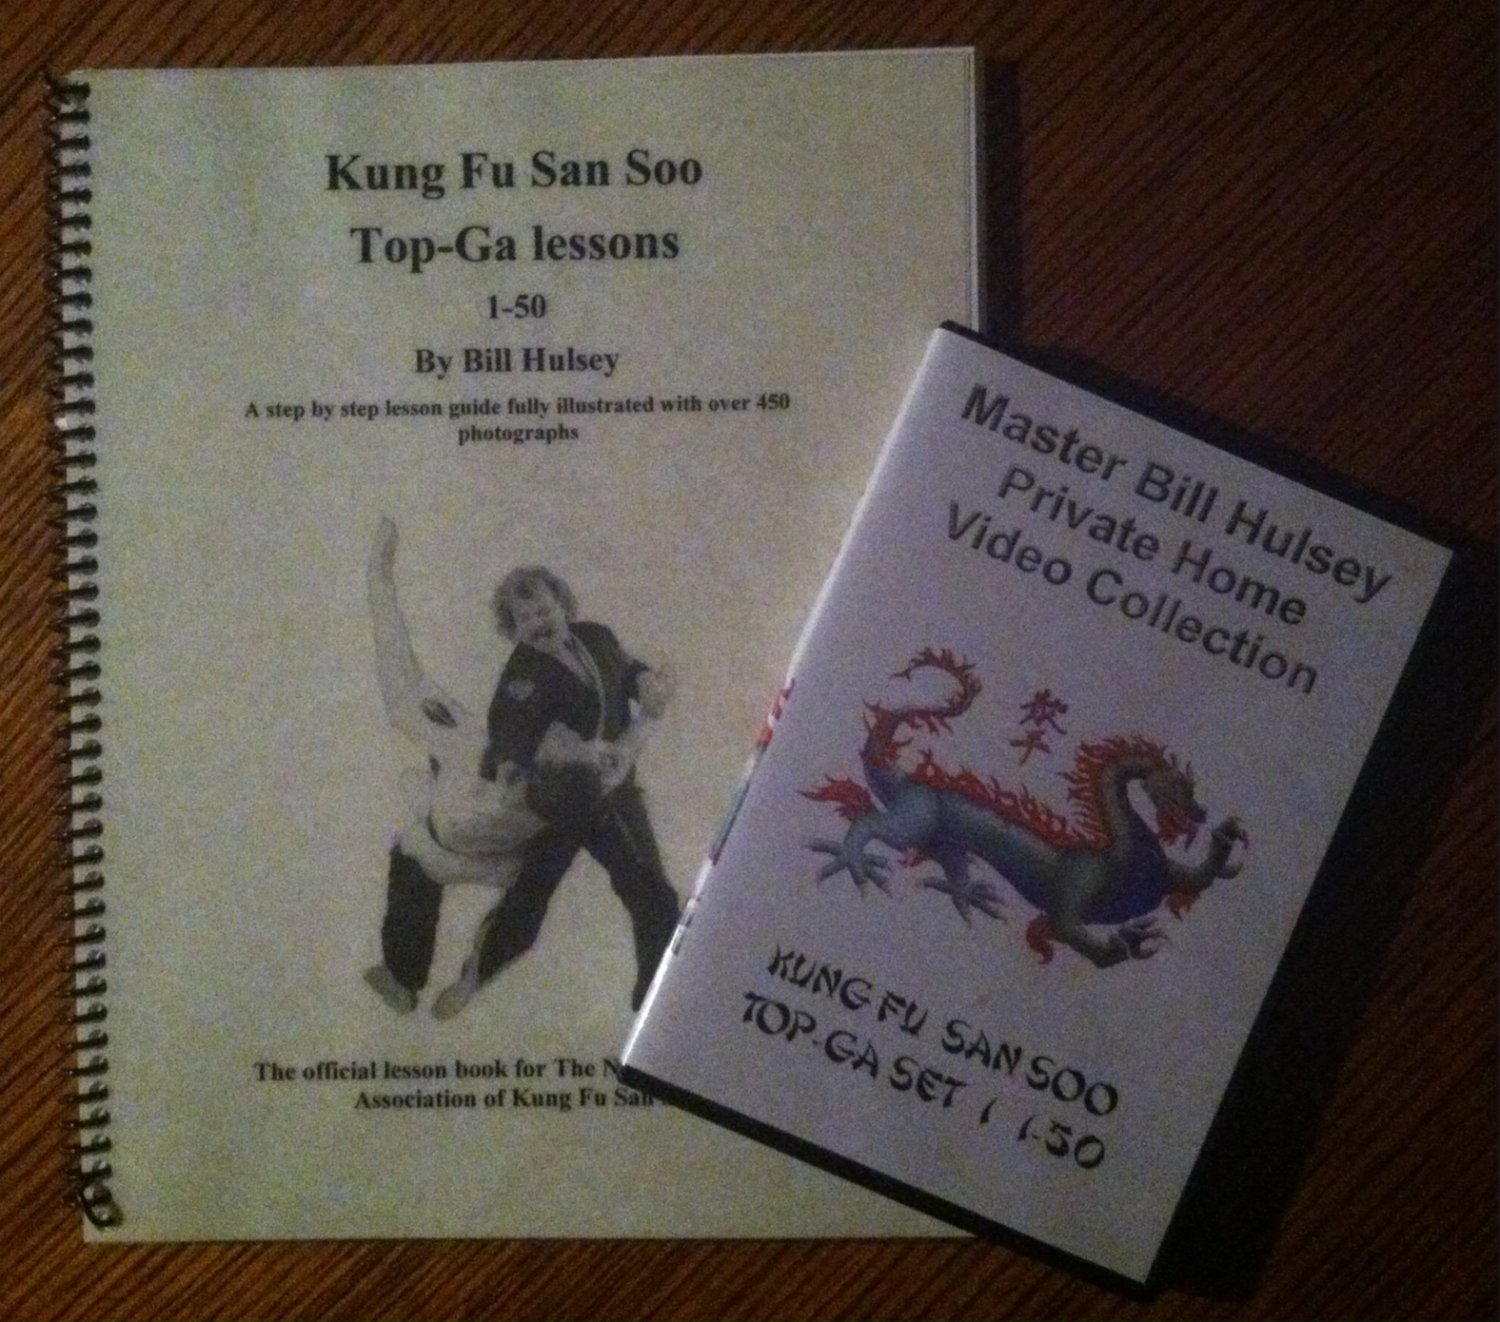 Top-Ga lessons DVD & lesson book